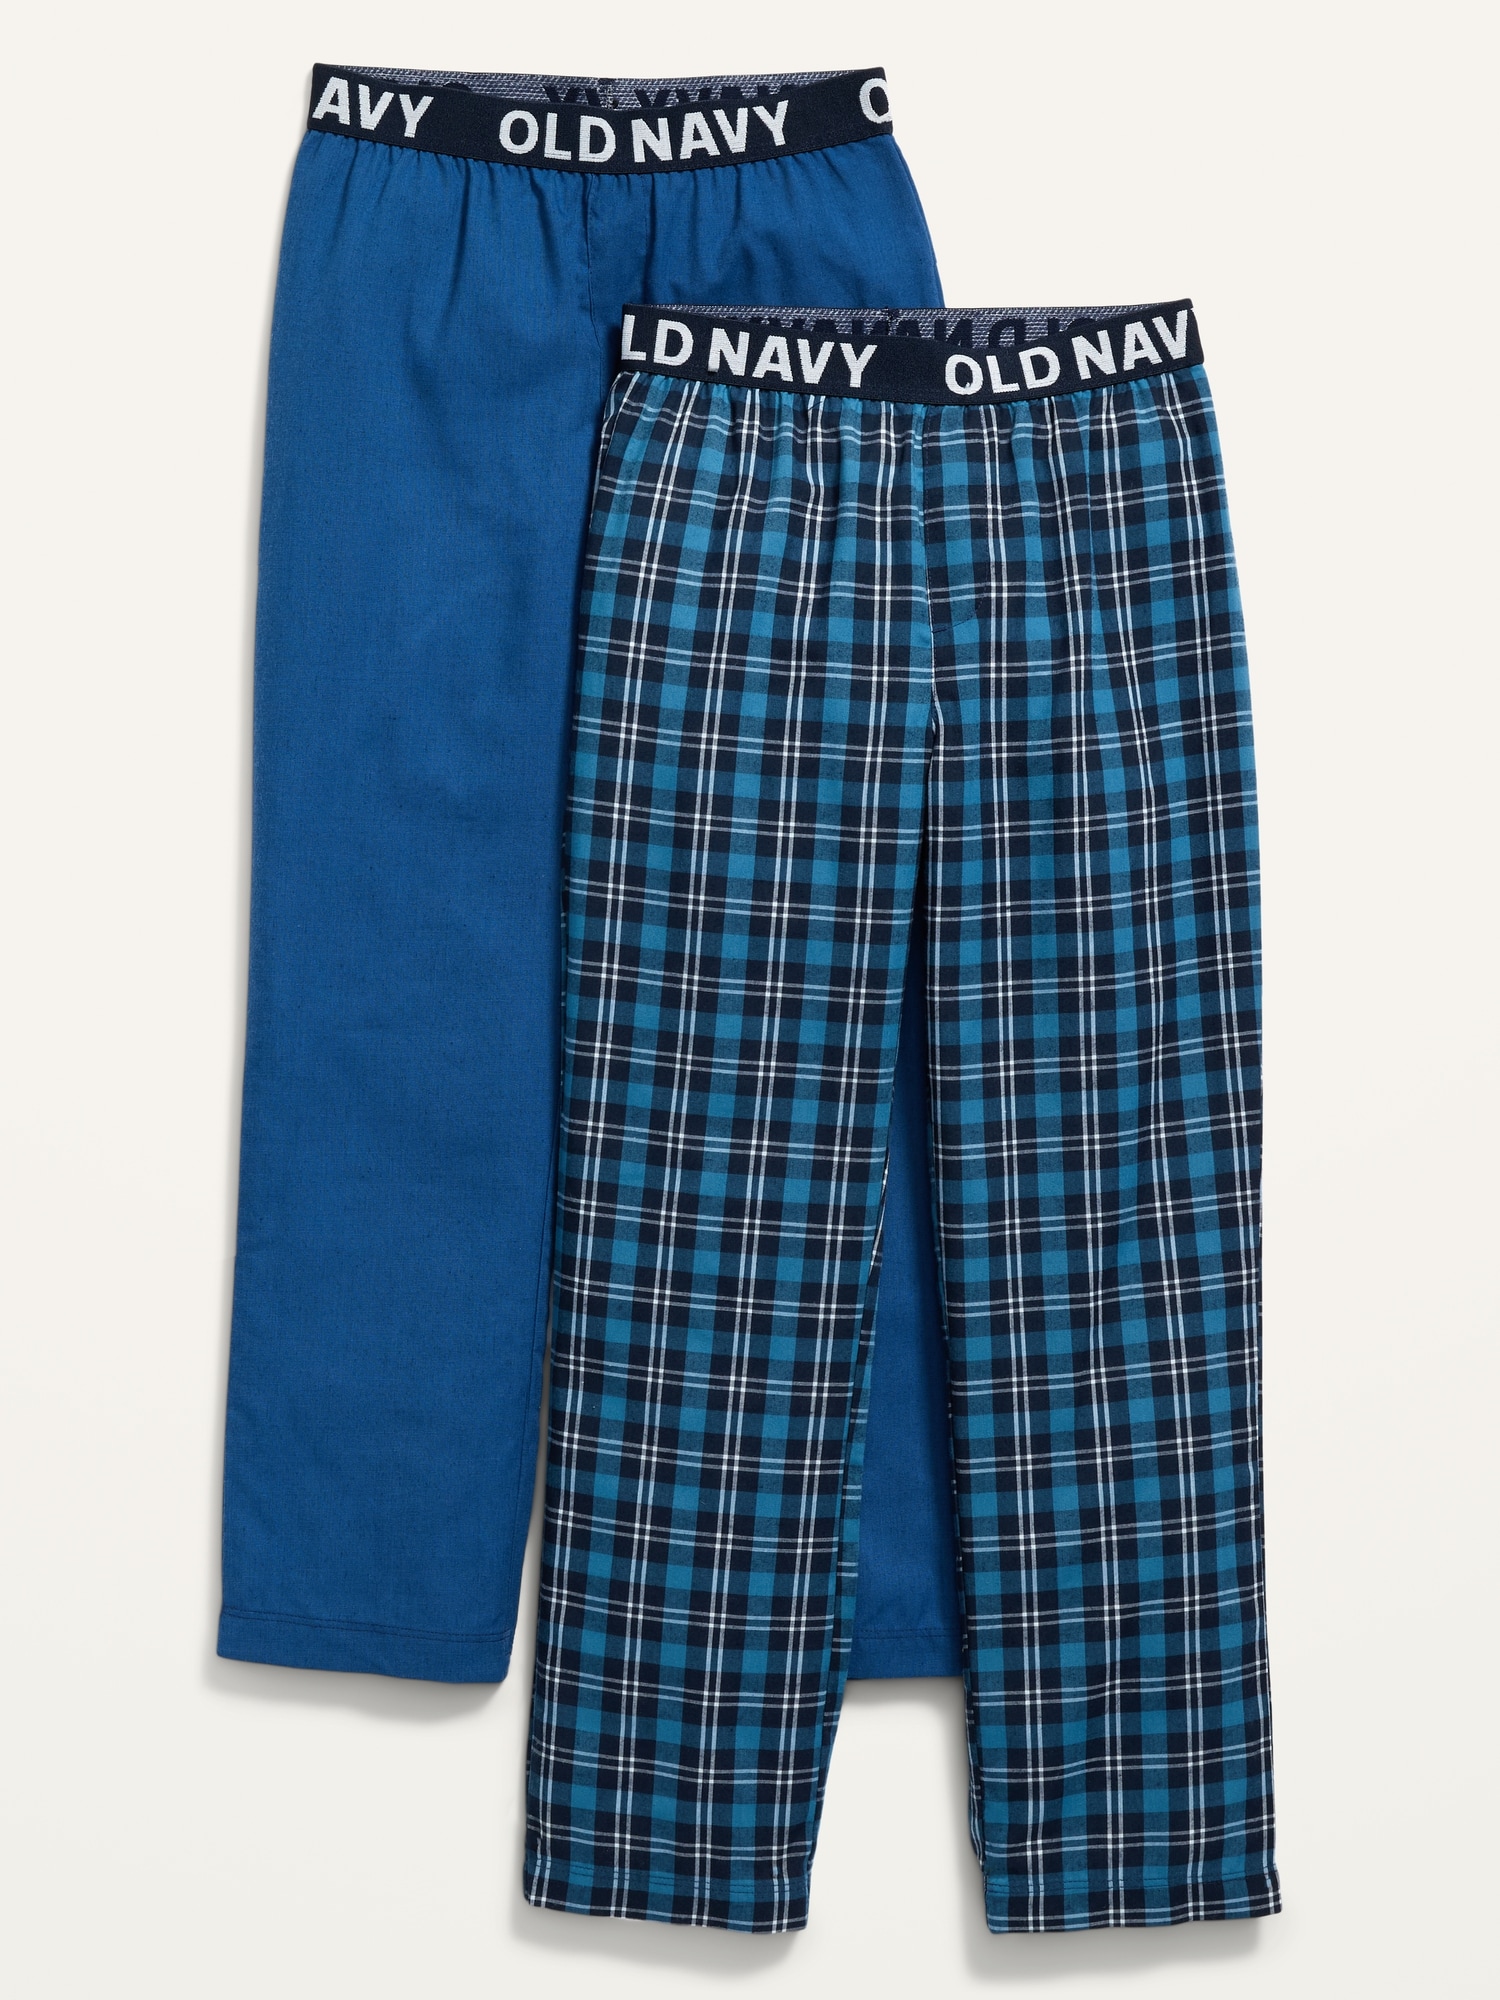 Old Navy Patterned Poplin Pajama Pants 2-Pack for Boys blue. 1